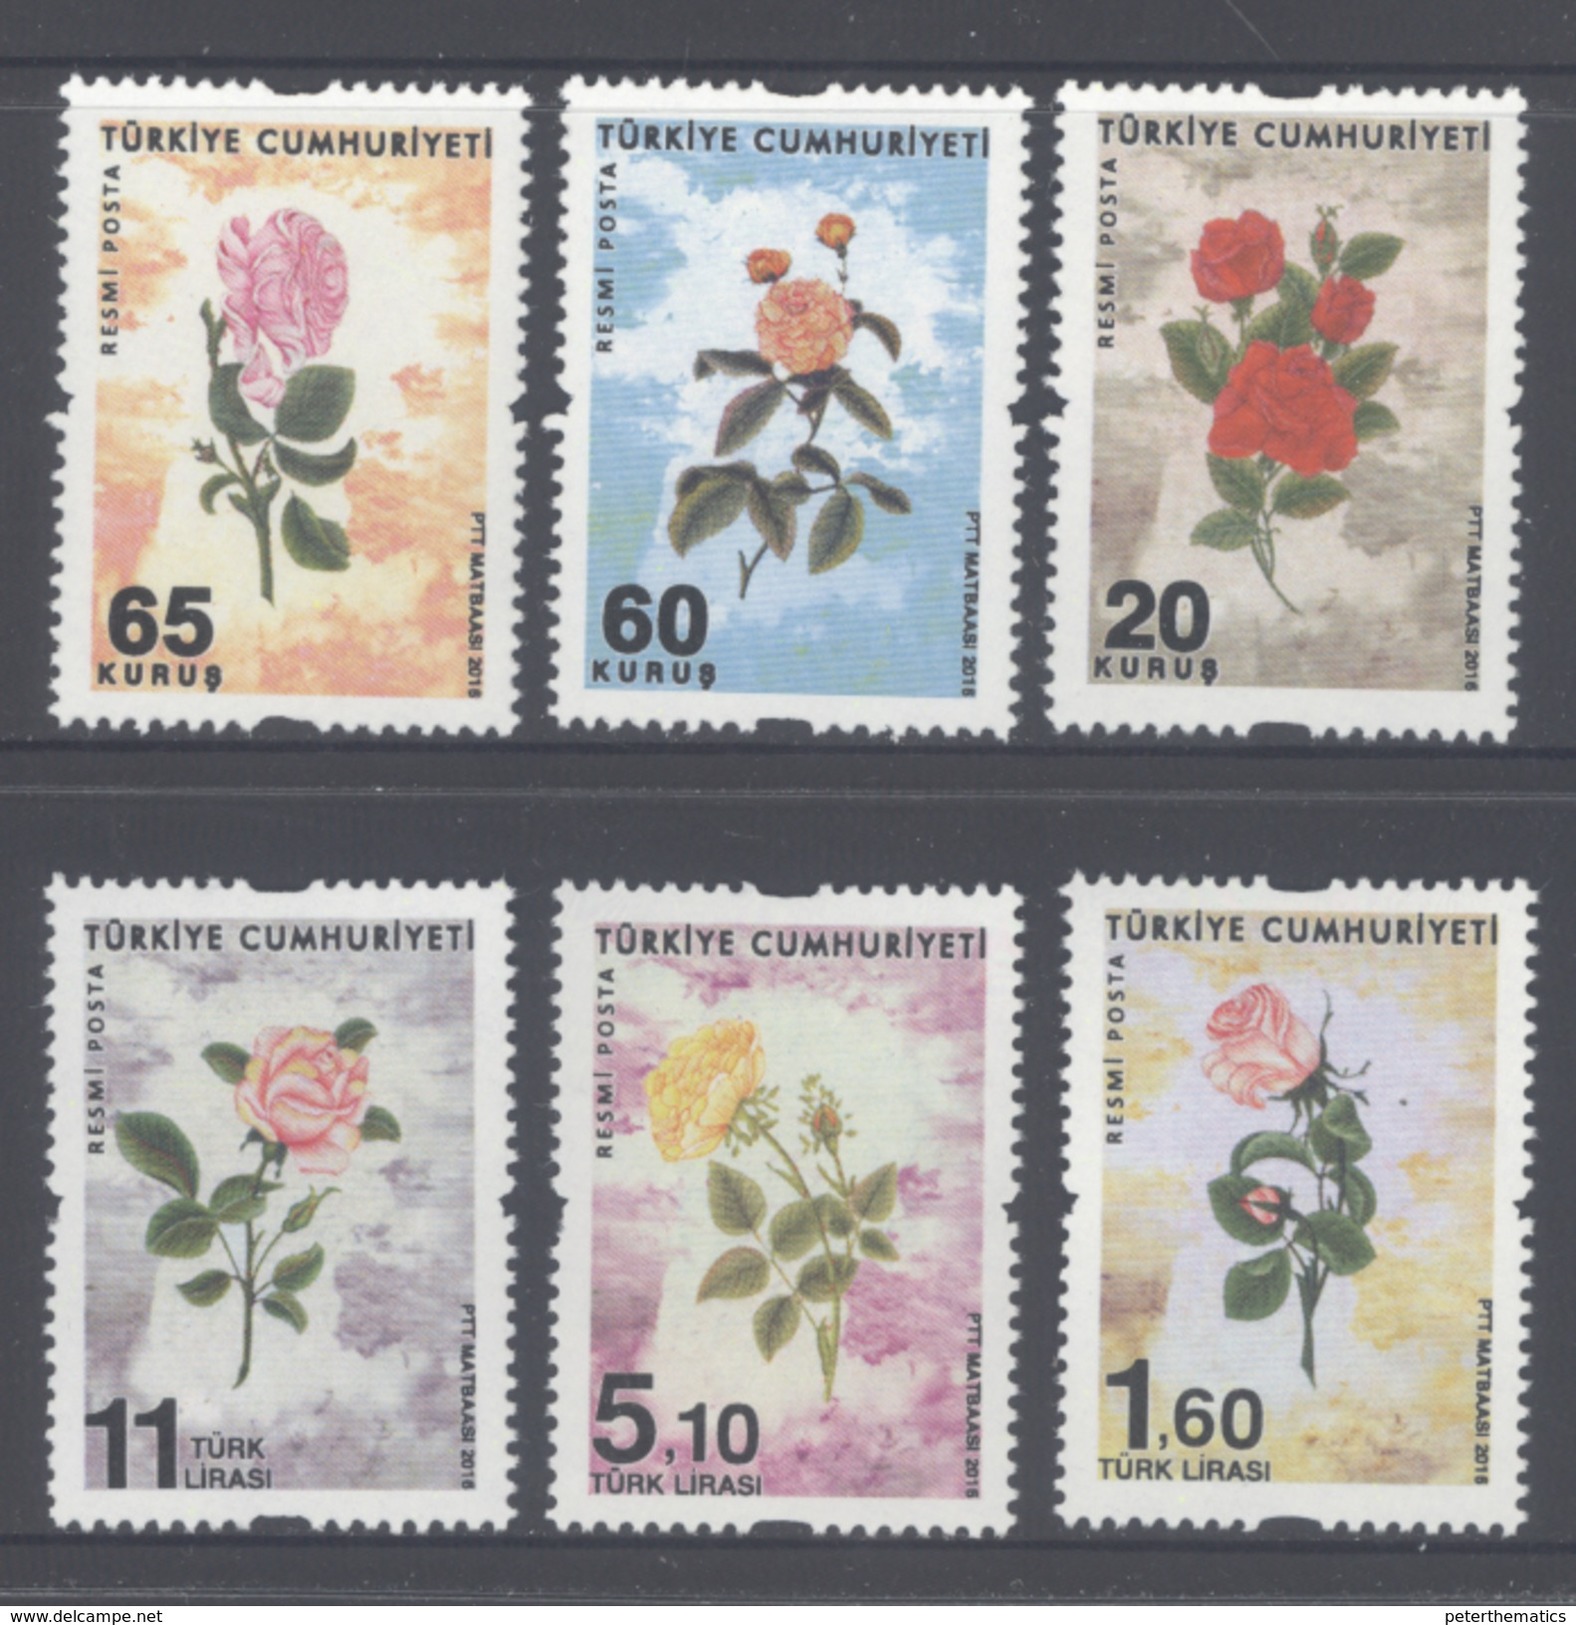 TURKEY, 2016, MNH, OFFICIALS, FLOWERS, ROSES, 6v - Rosen